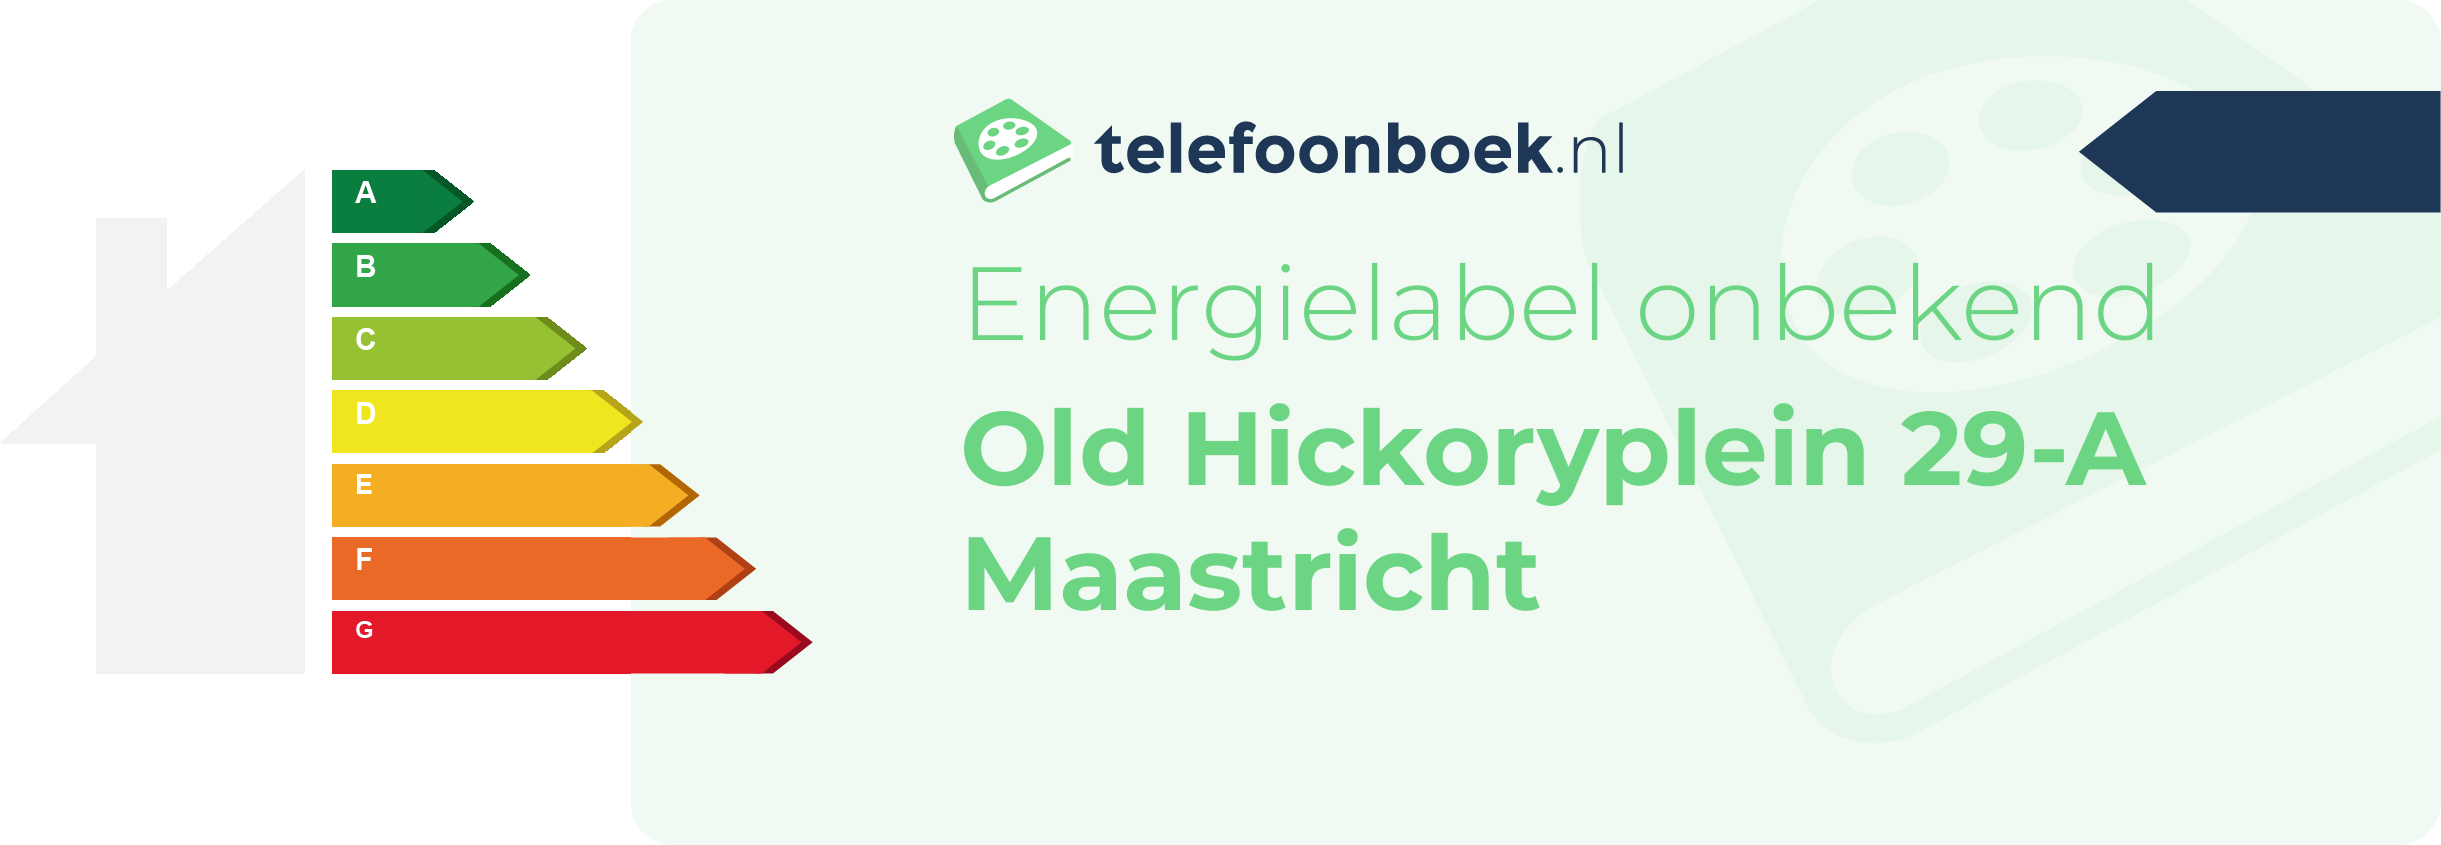 Energielabel Old Hickoryplein 29-A Maastricht